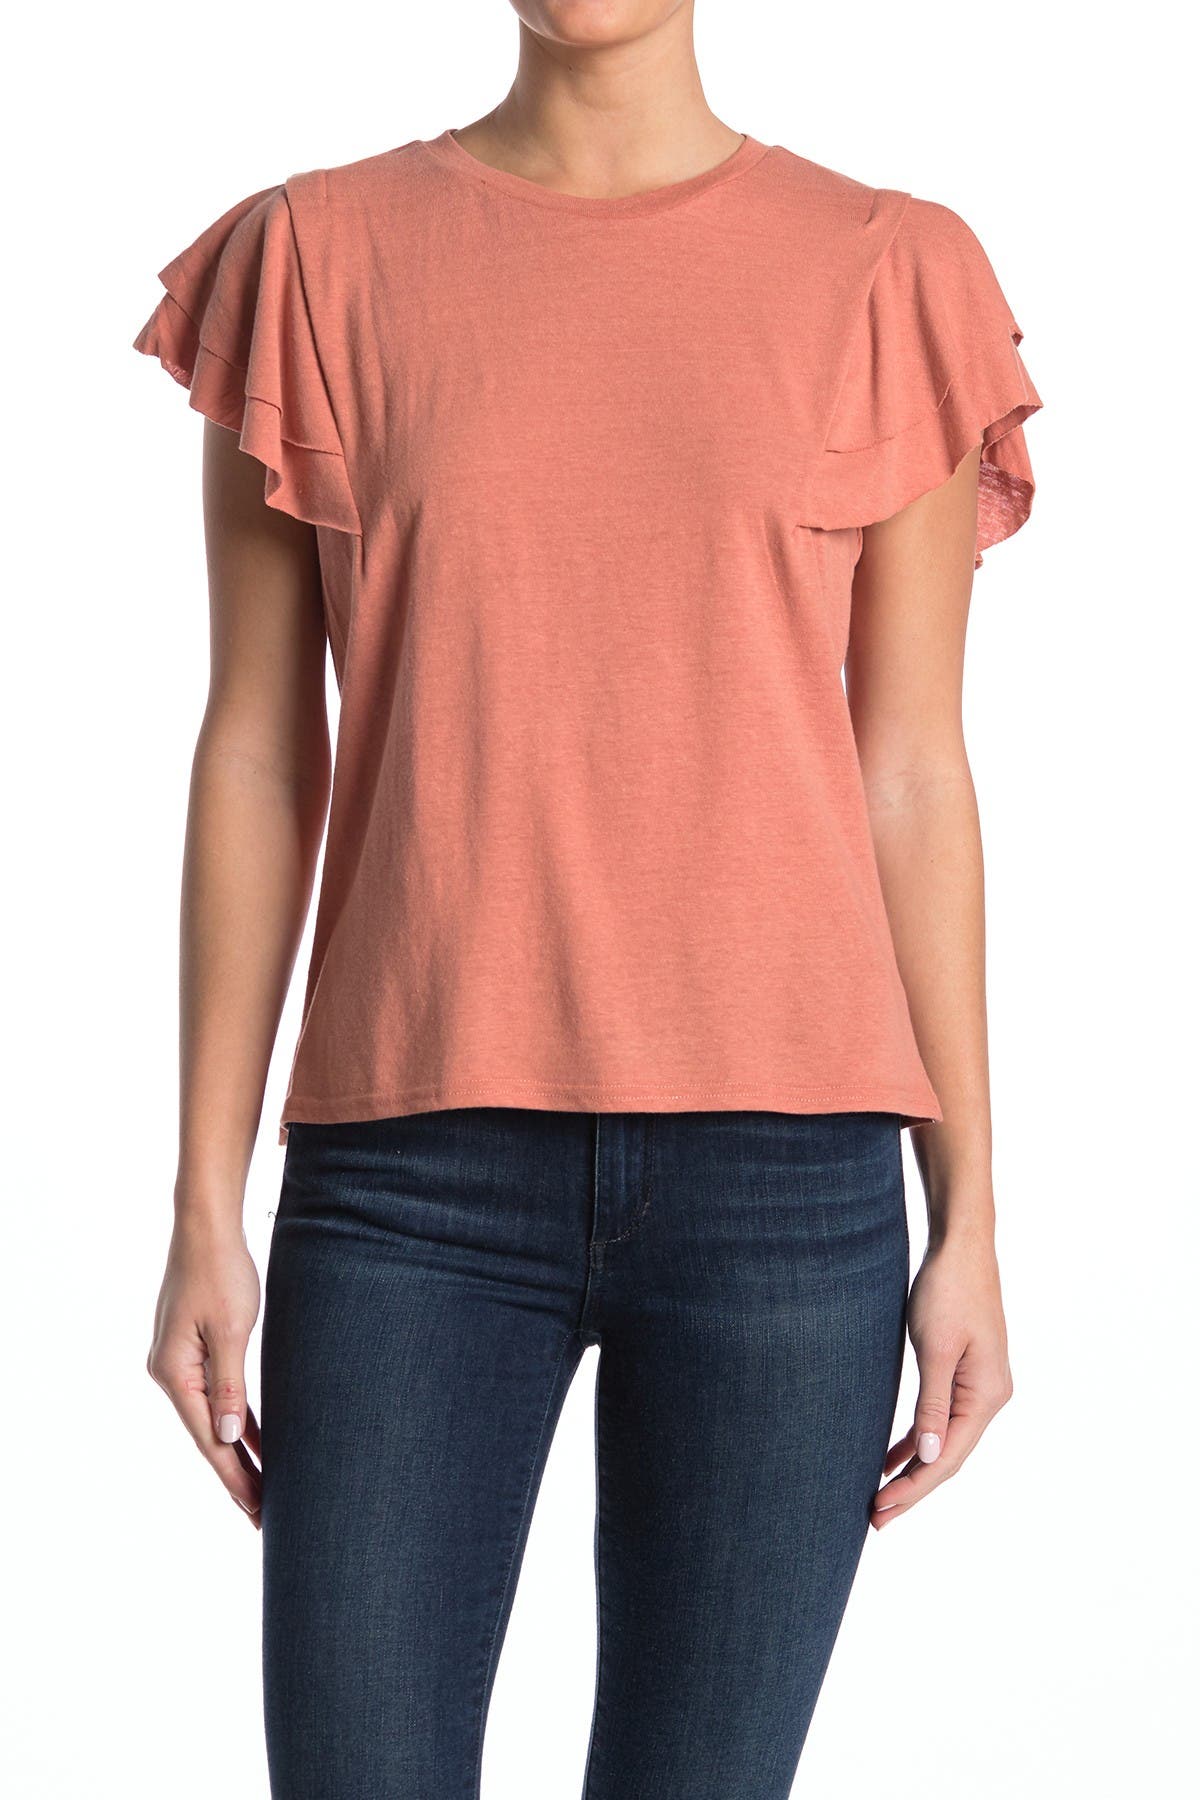 Melloday Tiered Ruffle Sleeve T-shirt In Medium Pink1